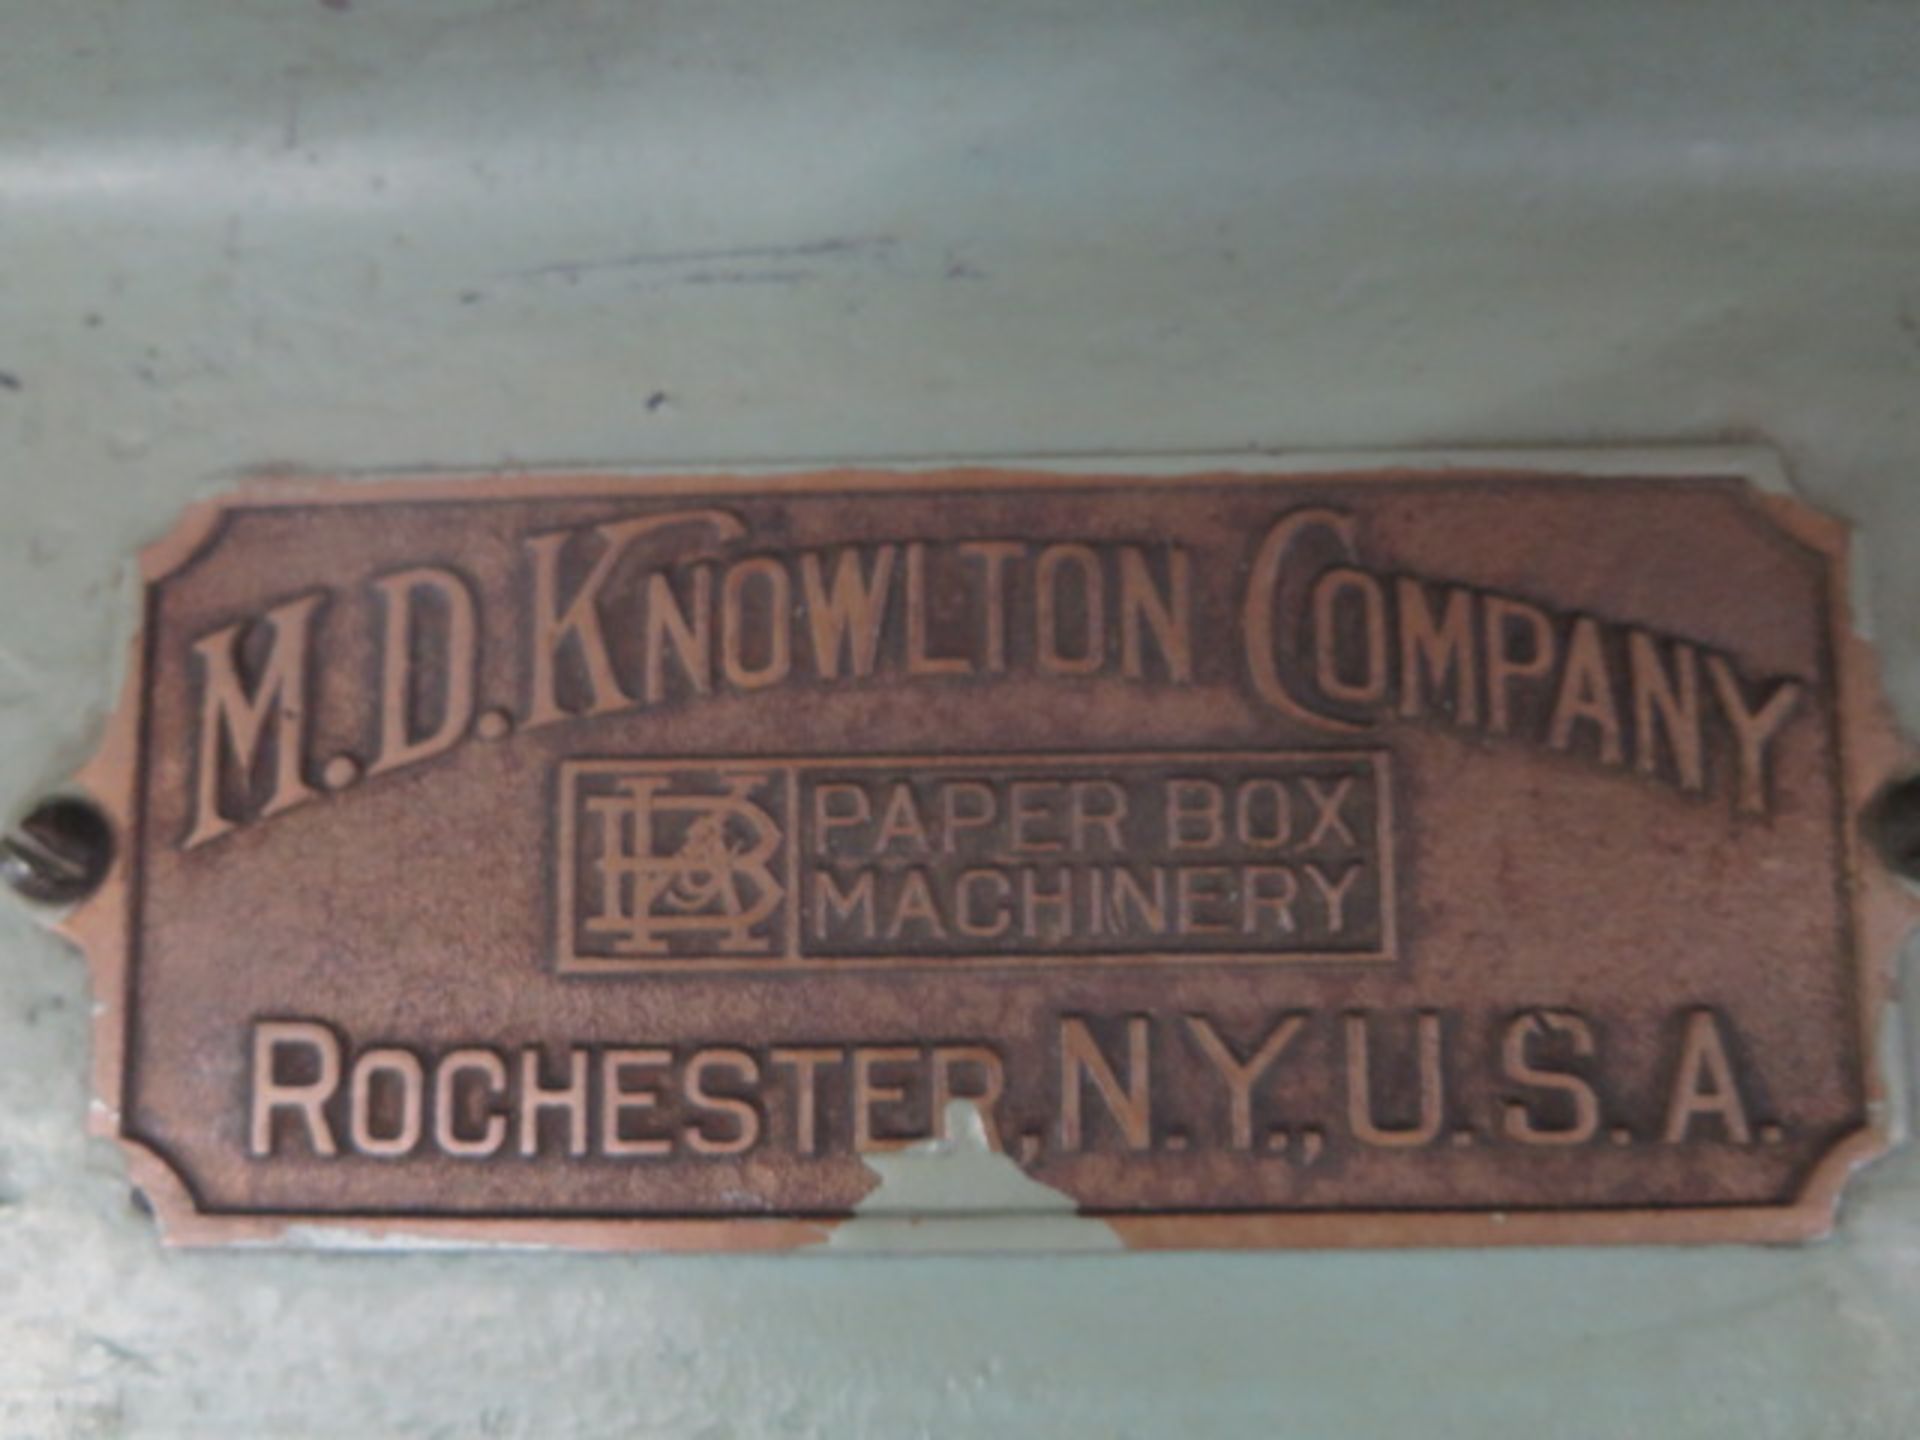 M.D. Knowlton 45” Single Score Machine - Image 5 of 5